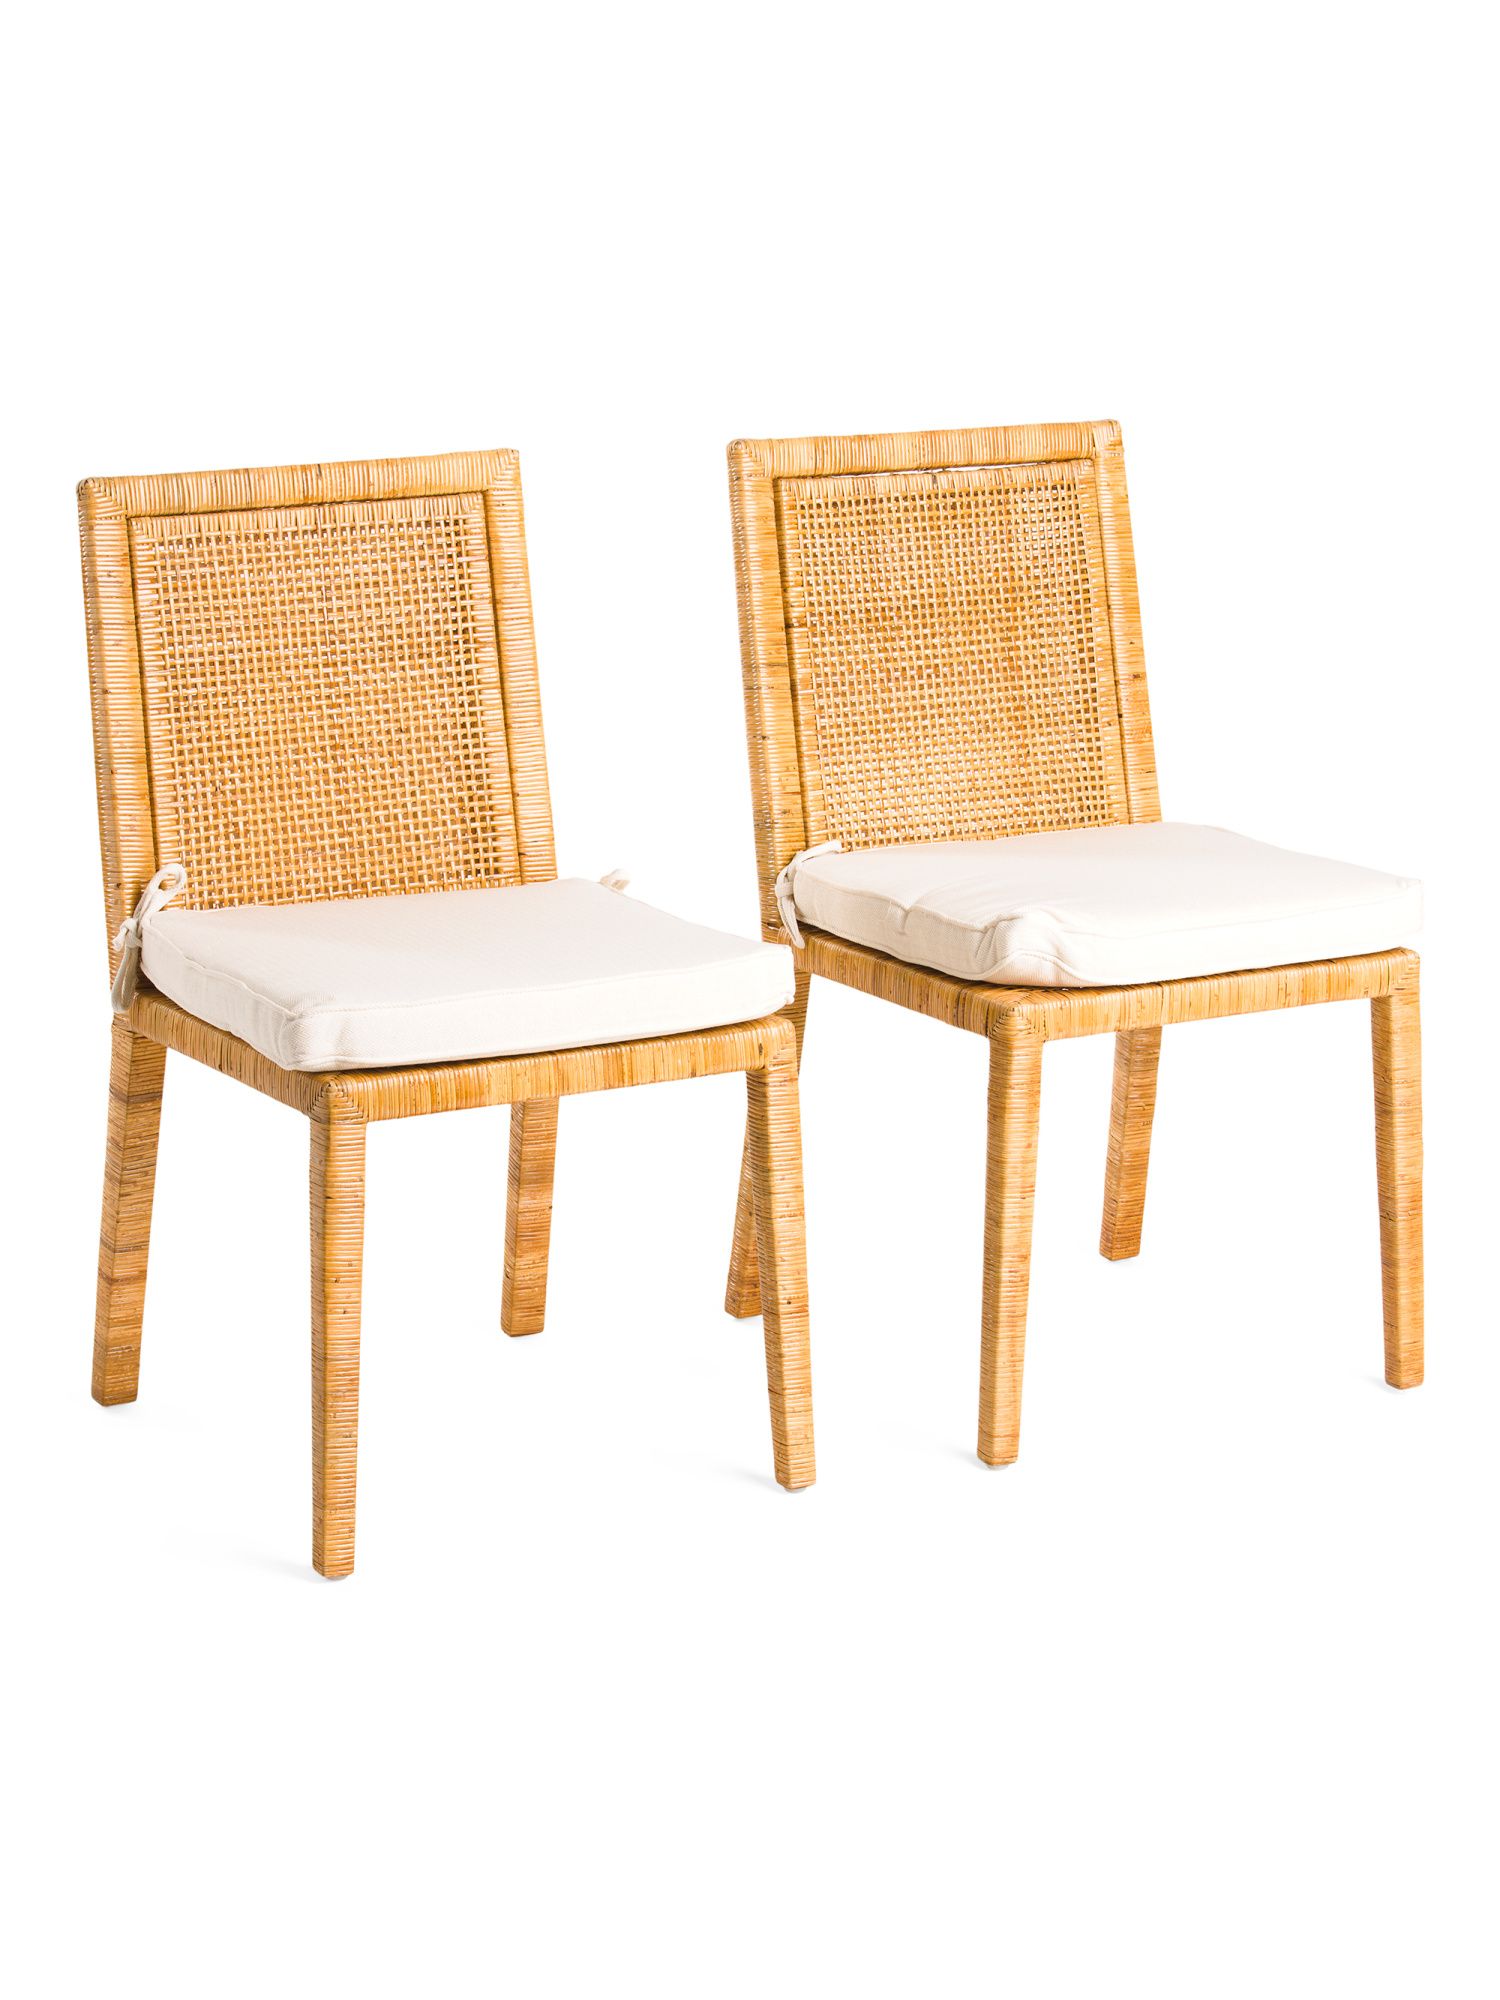 Set Of 2 Rattan Dining Chairs | Marshalls